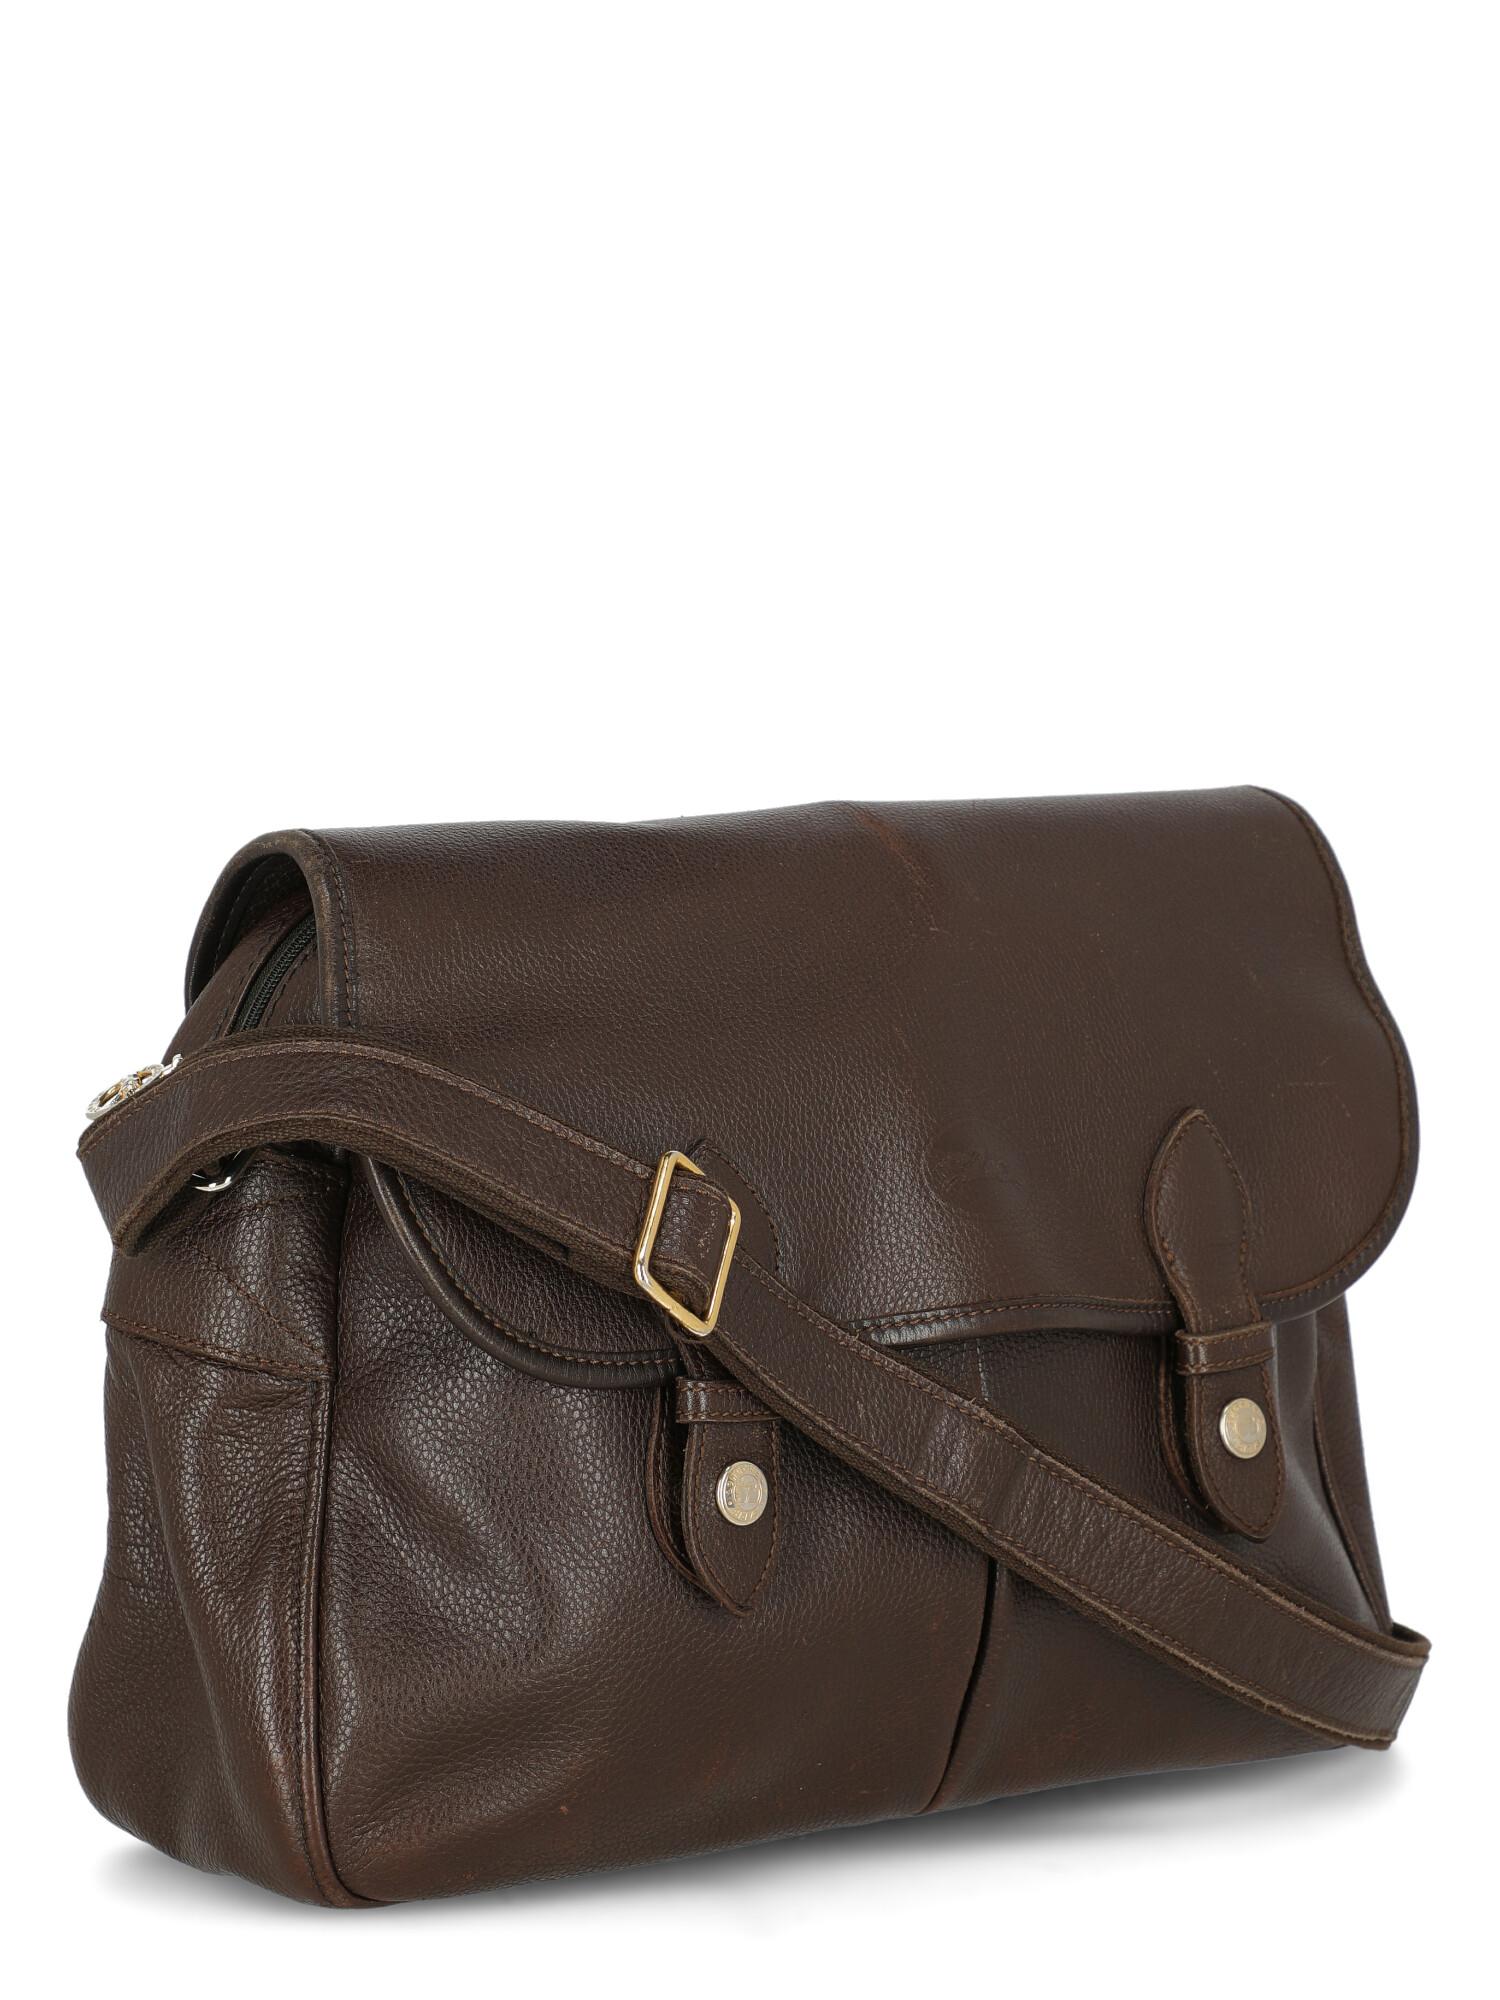 longchamp bag brown